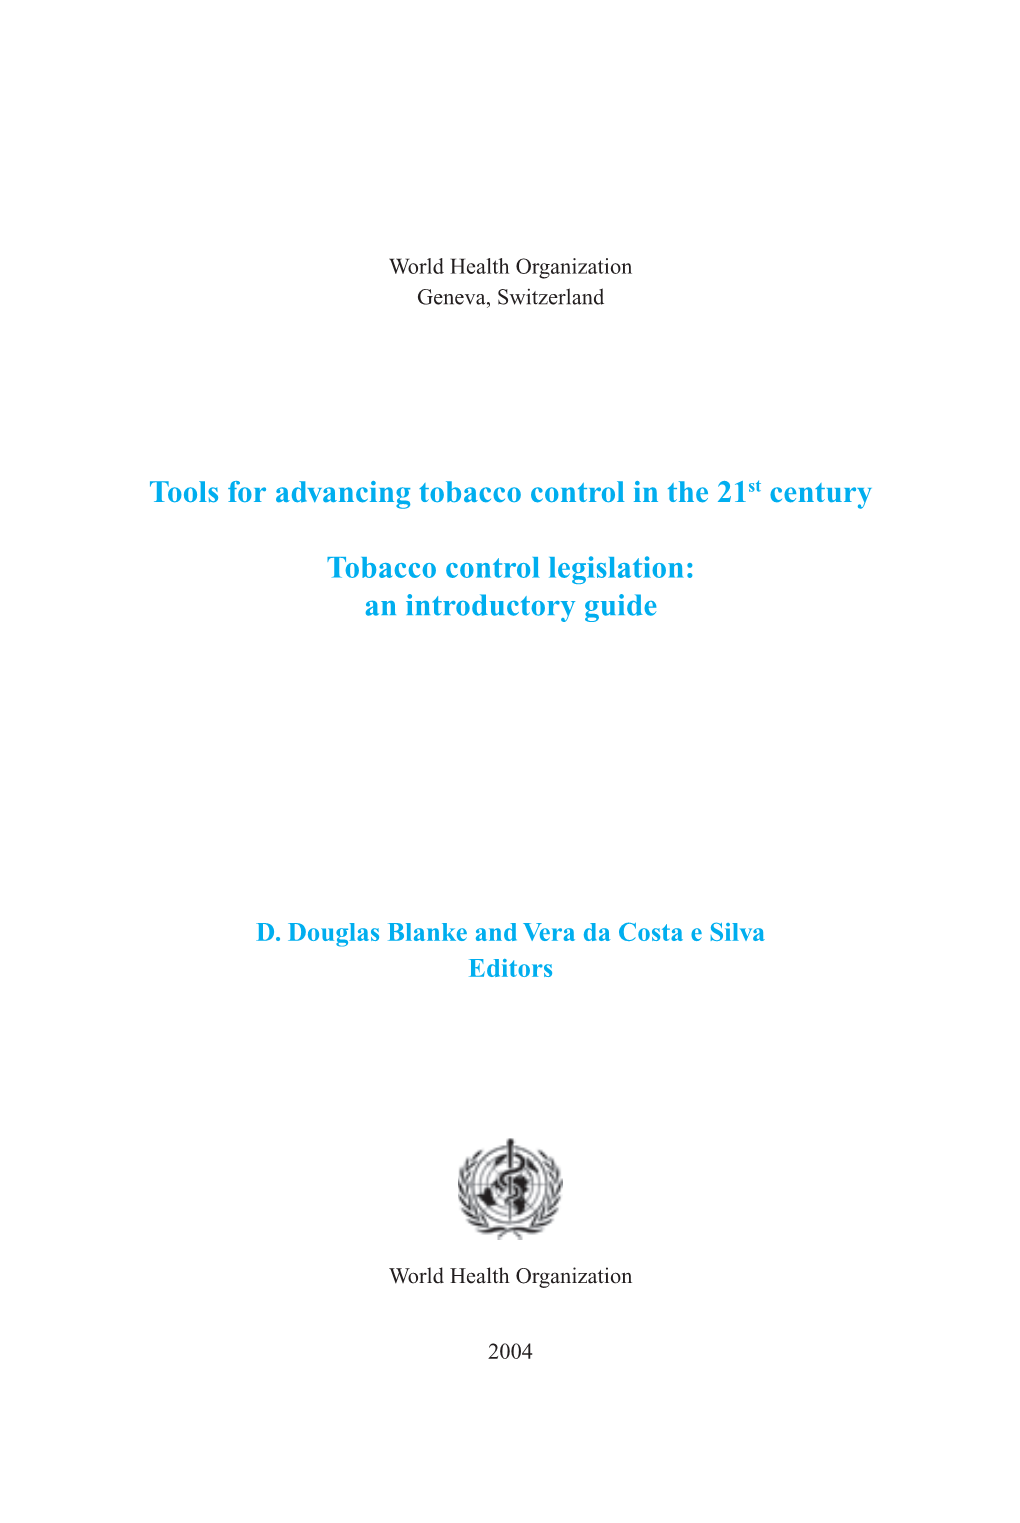 Tobacco Control Legislation: an Introductory Guide